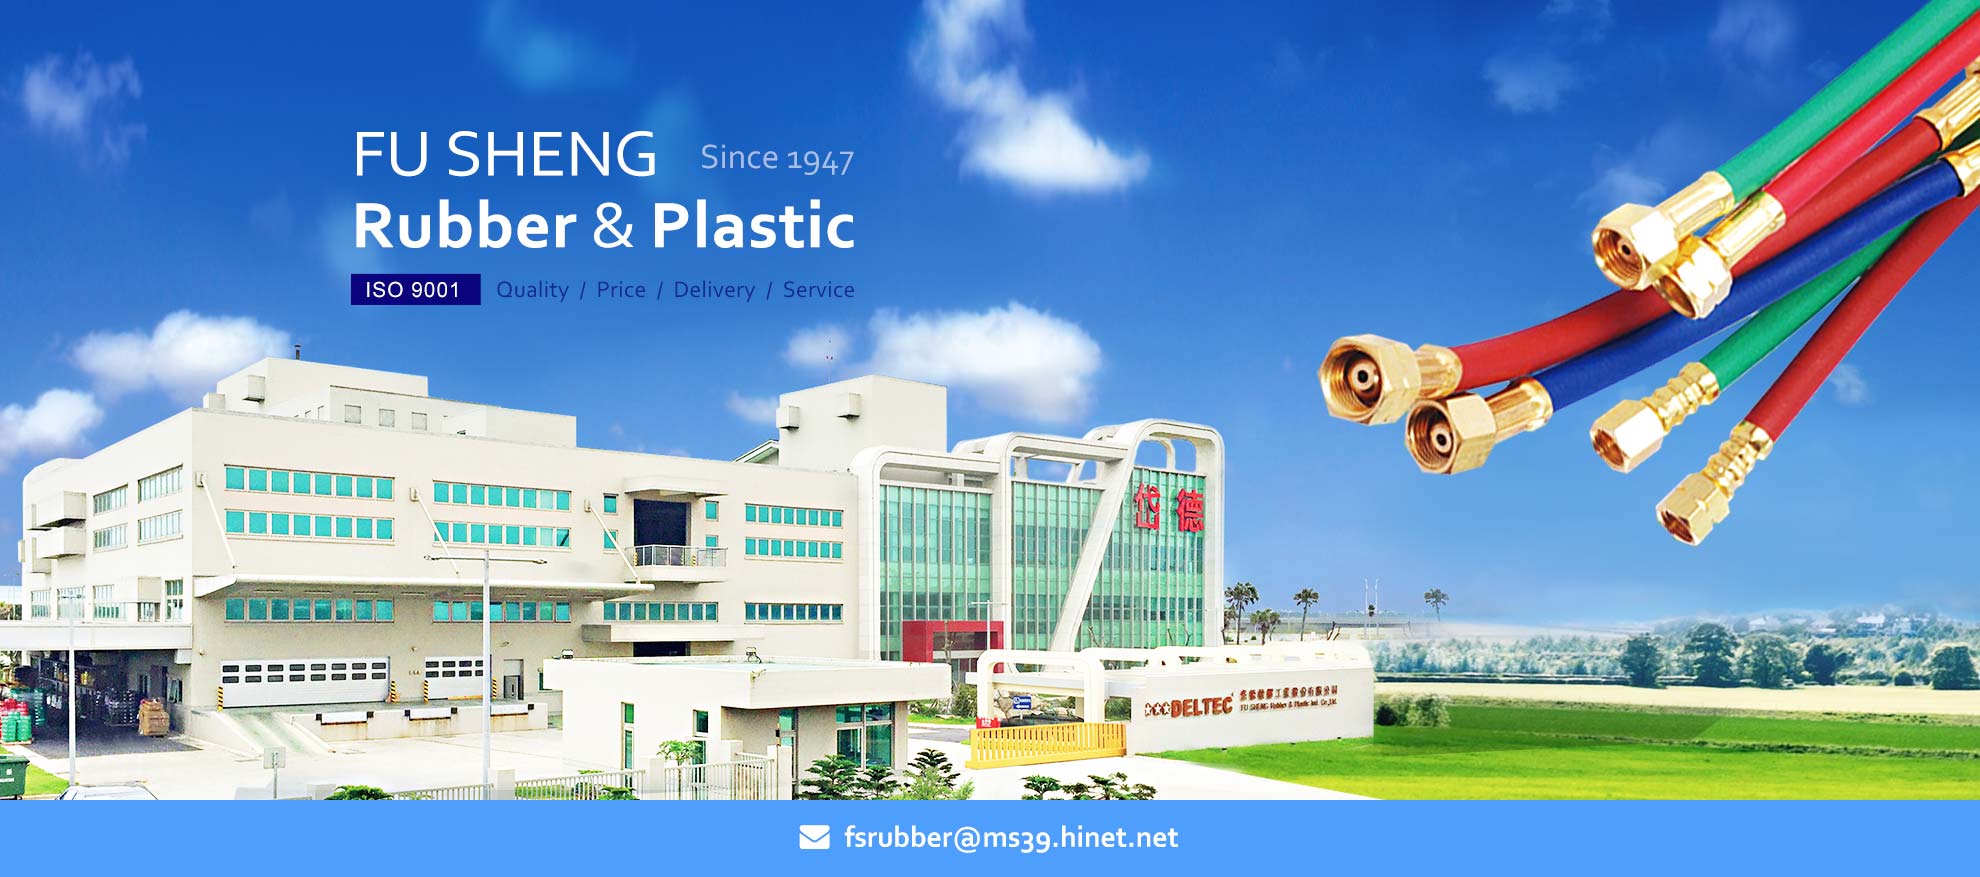 FU SHENG  Rubber & Plastic